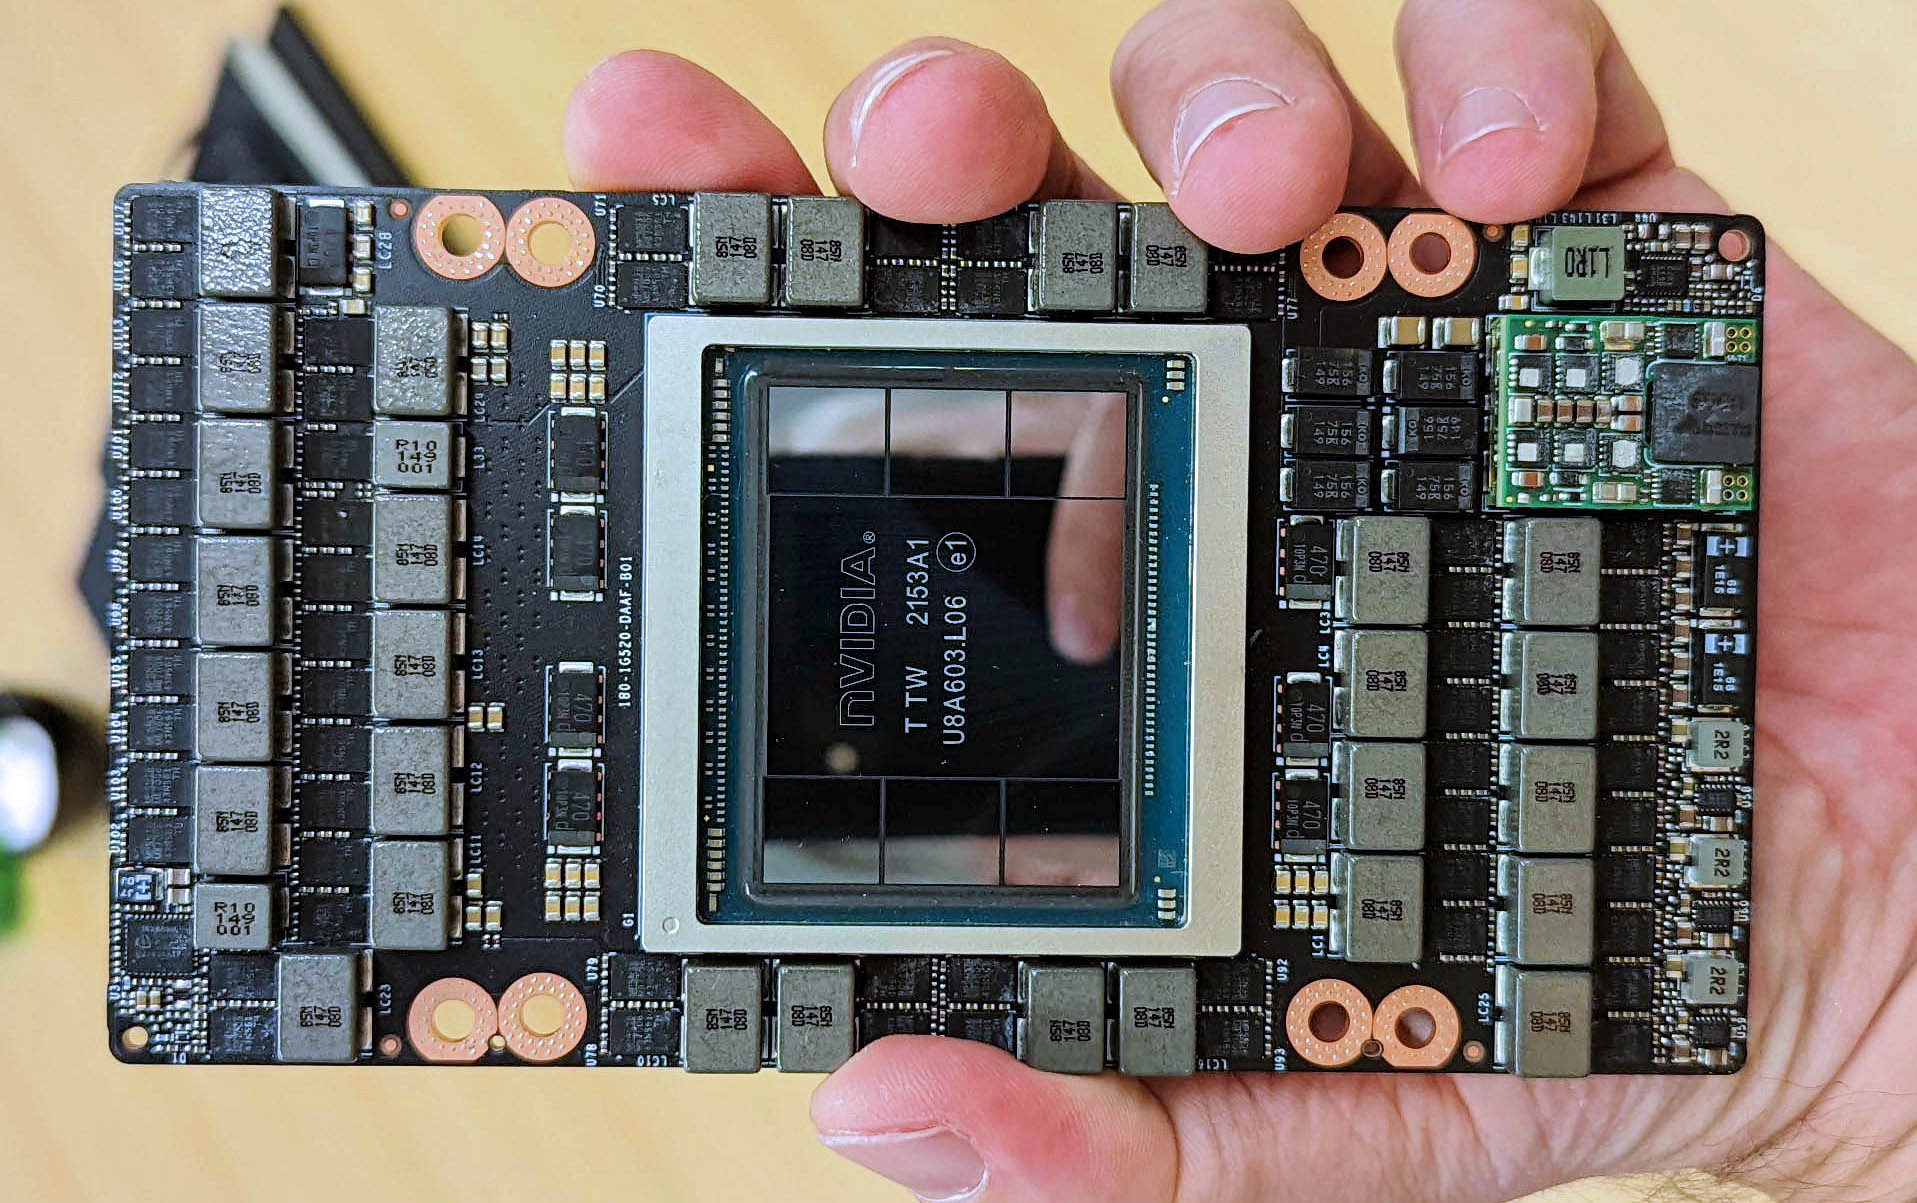 AMD Radeon RX 6800 16GB GPU Review - ServeTheHome